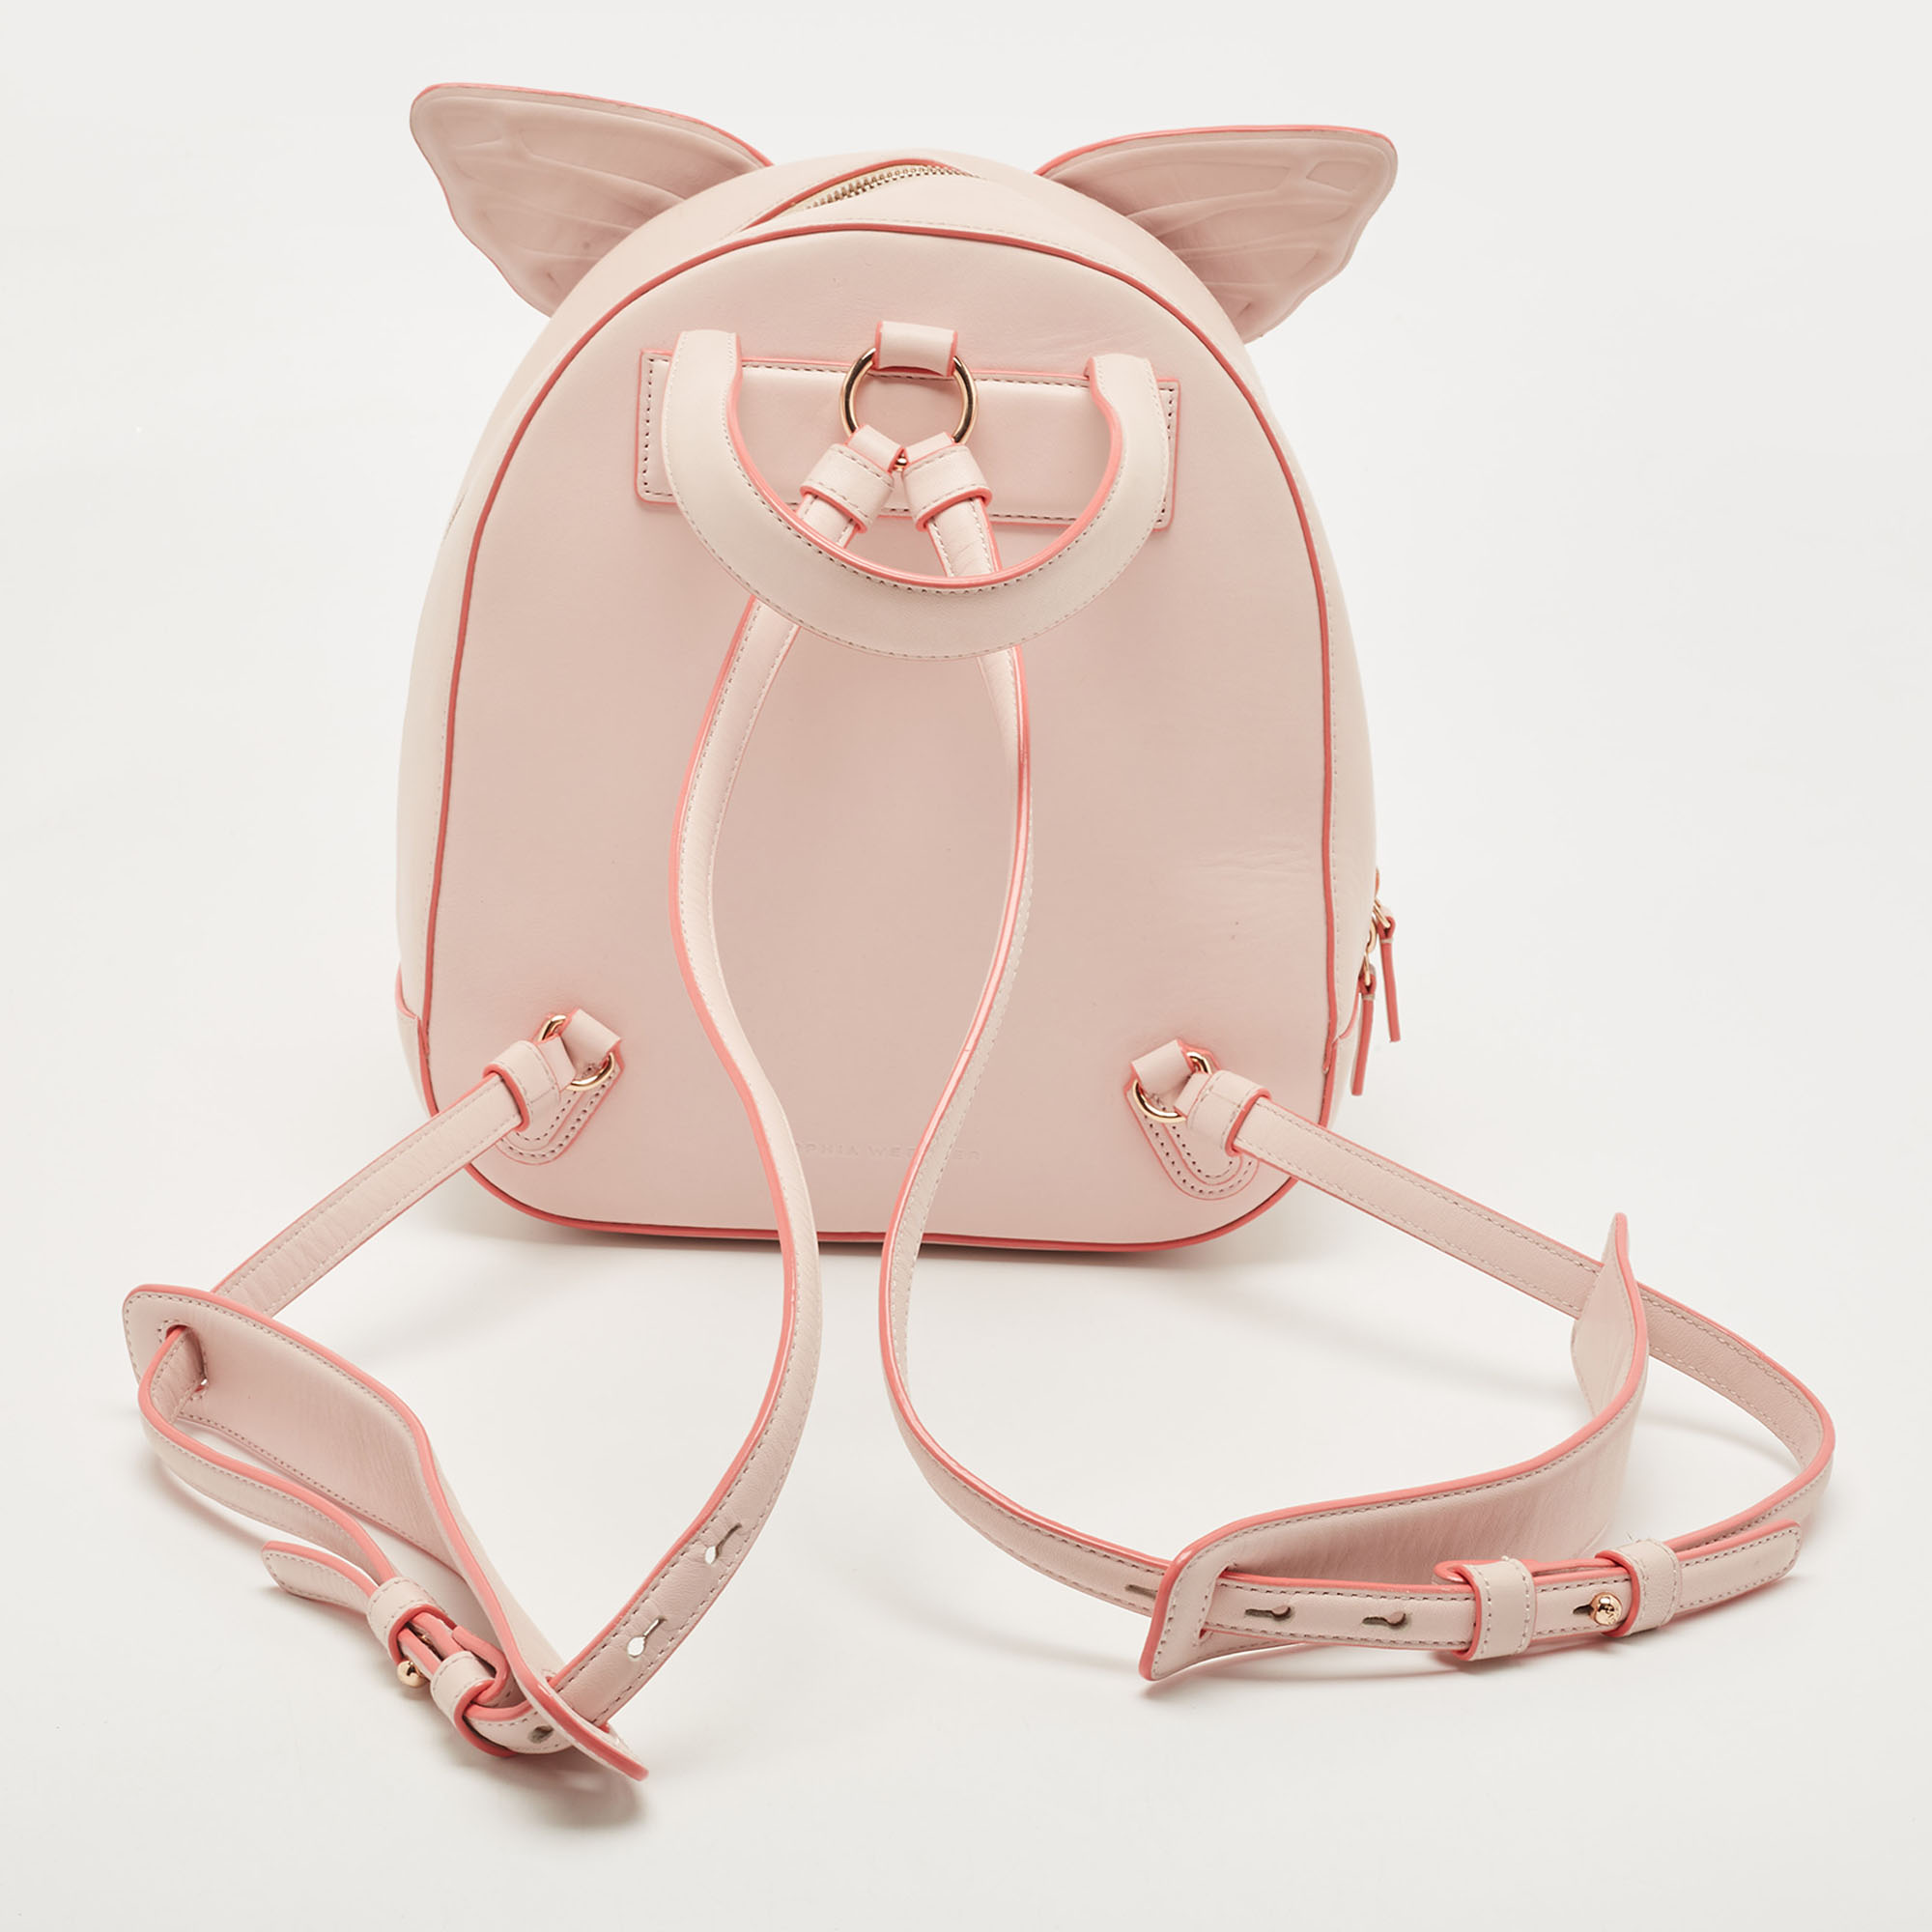 Sophia Webster Light Pink Leather Small Kiko Butterfly Backpack